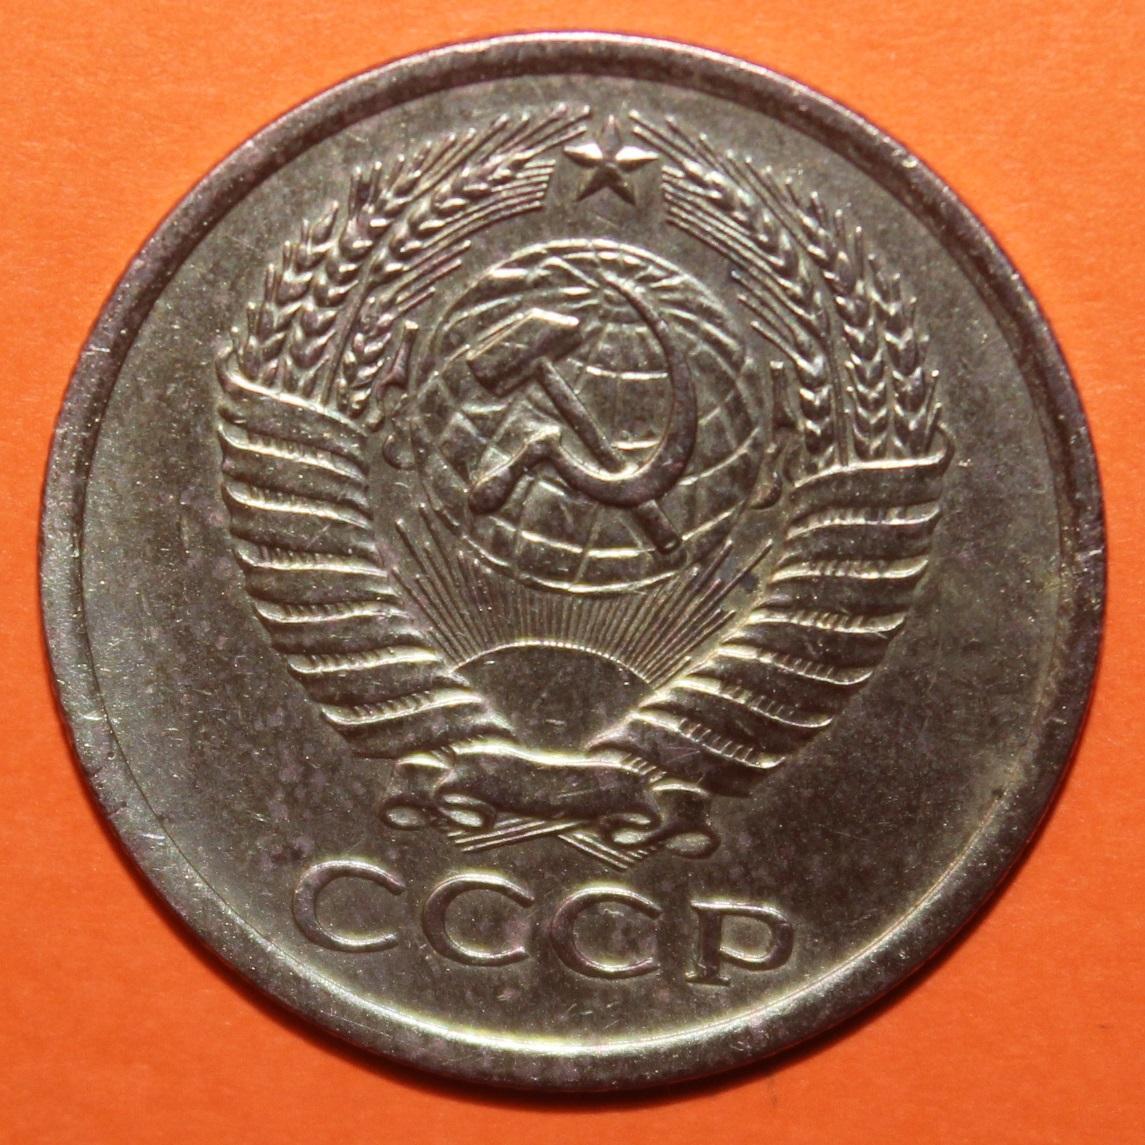 5 копеек СССР 1976 1